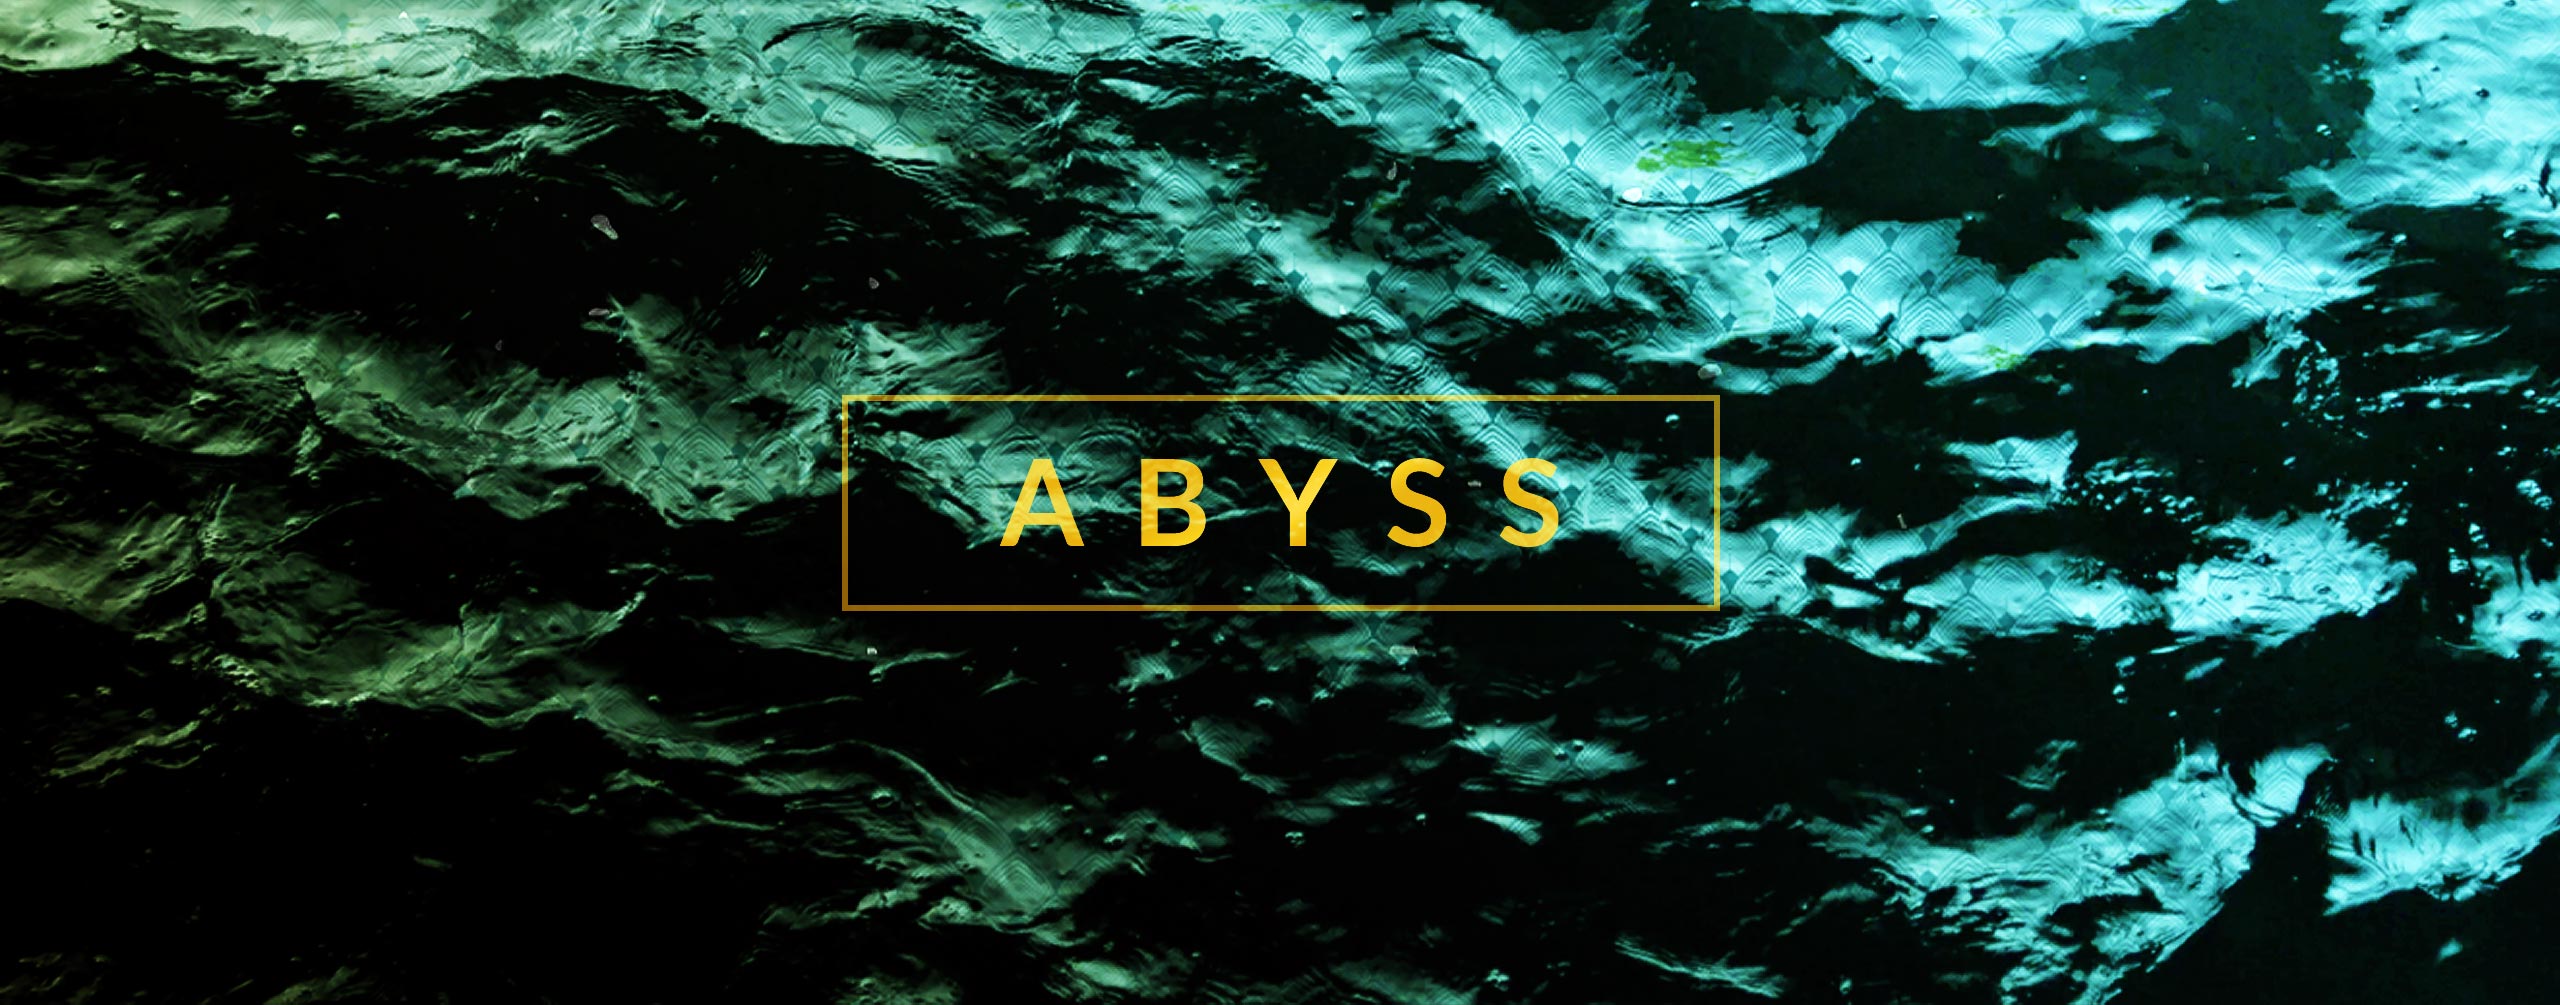 Abyss - Wave, Splash, Ripple Effects